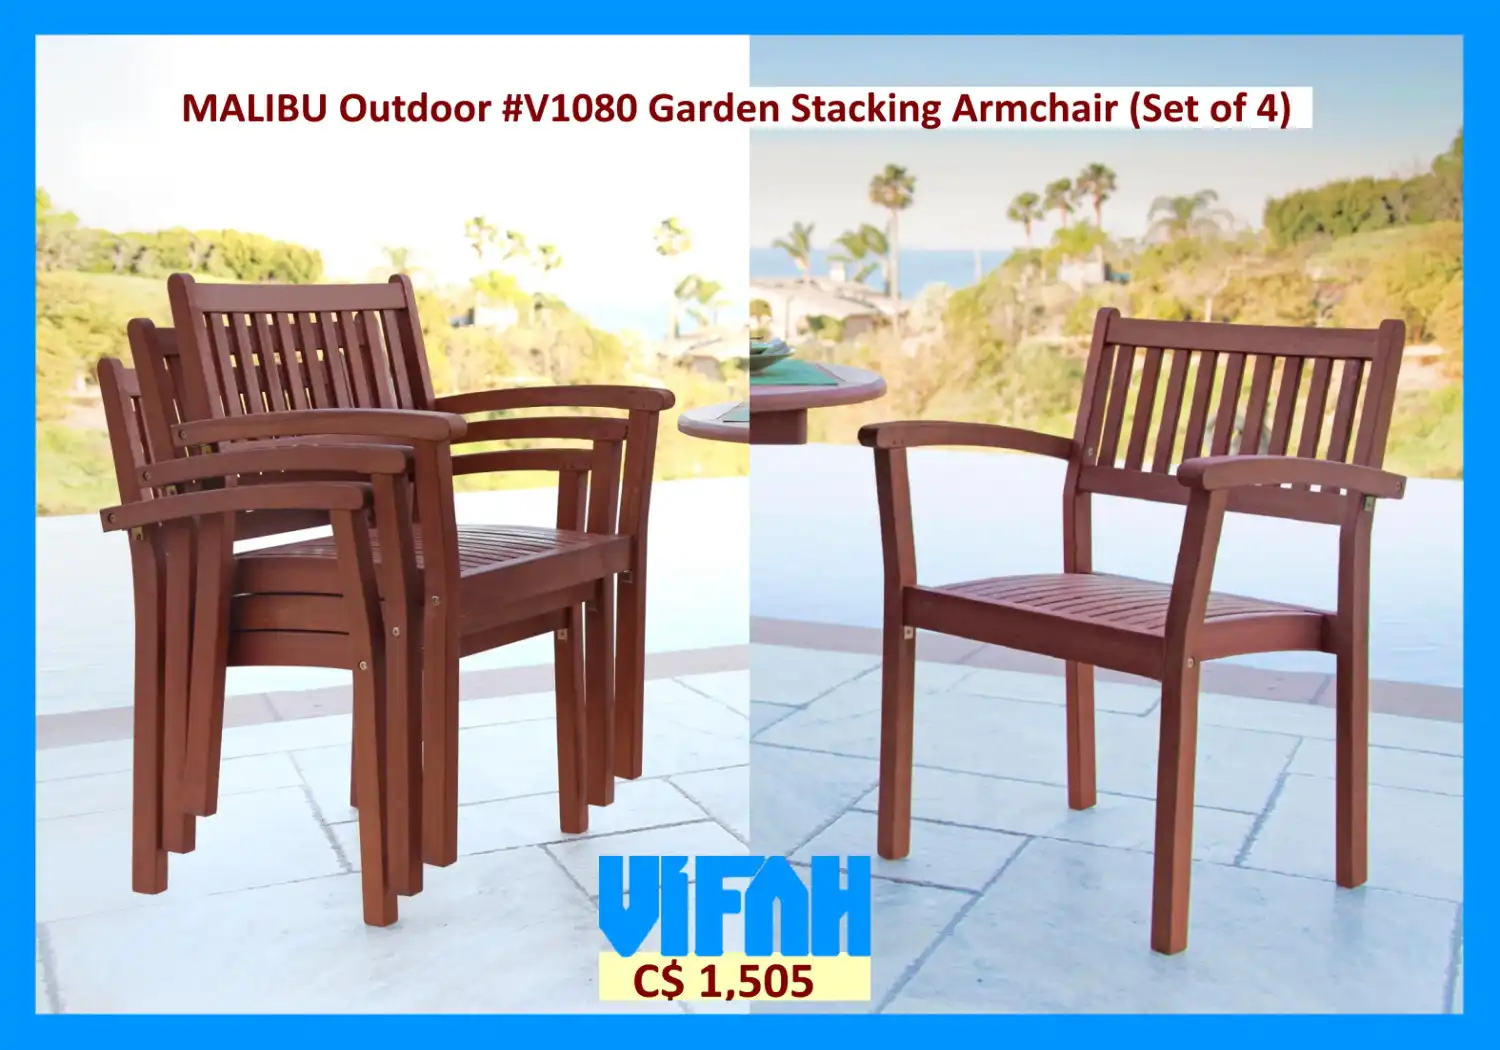 MALIBU Outdoor #V1080 Garden Stacking Armchair (Set of 4)